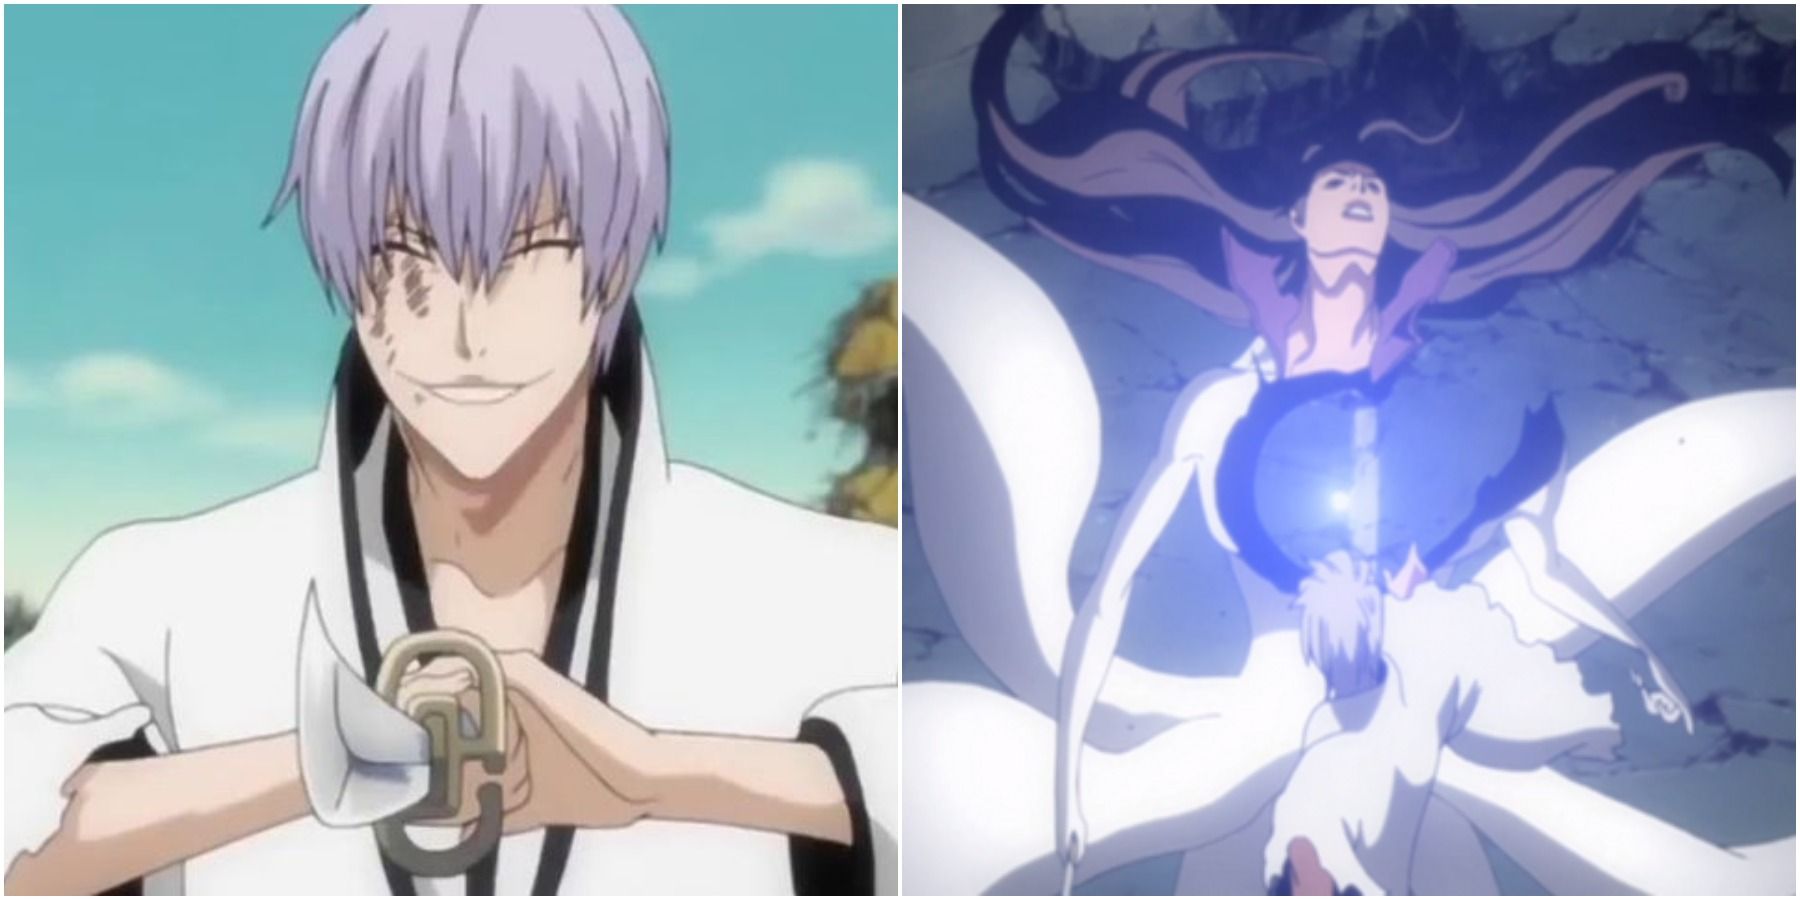 Ichimaru Using Both Versions Of His Bankai In Bleach